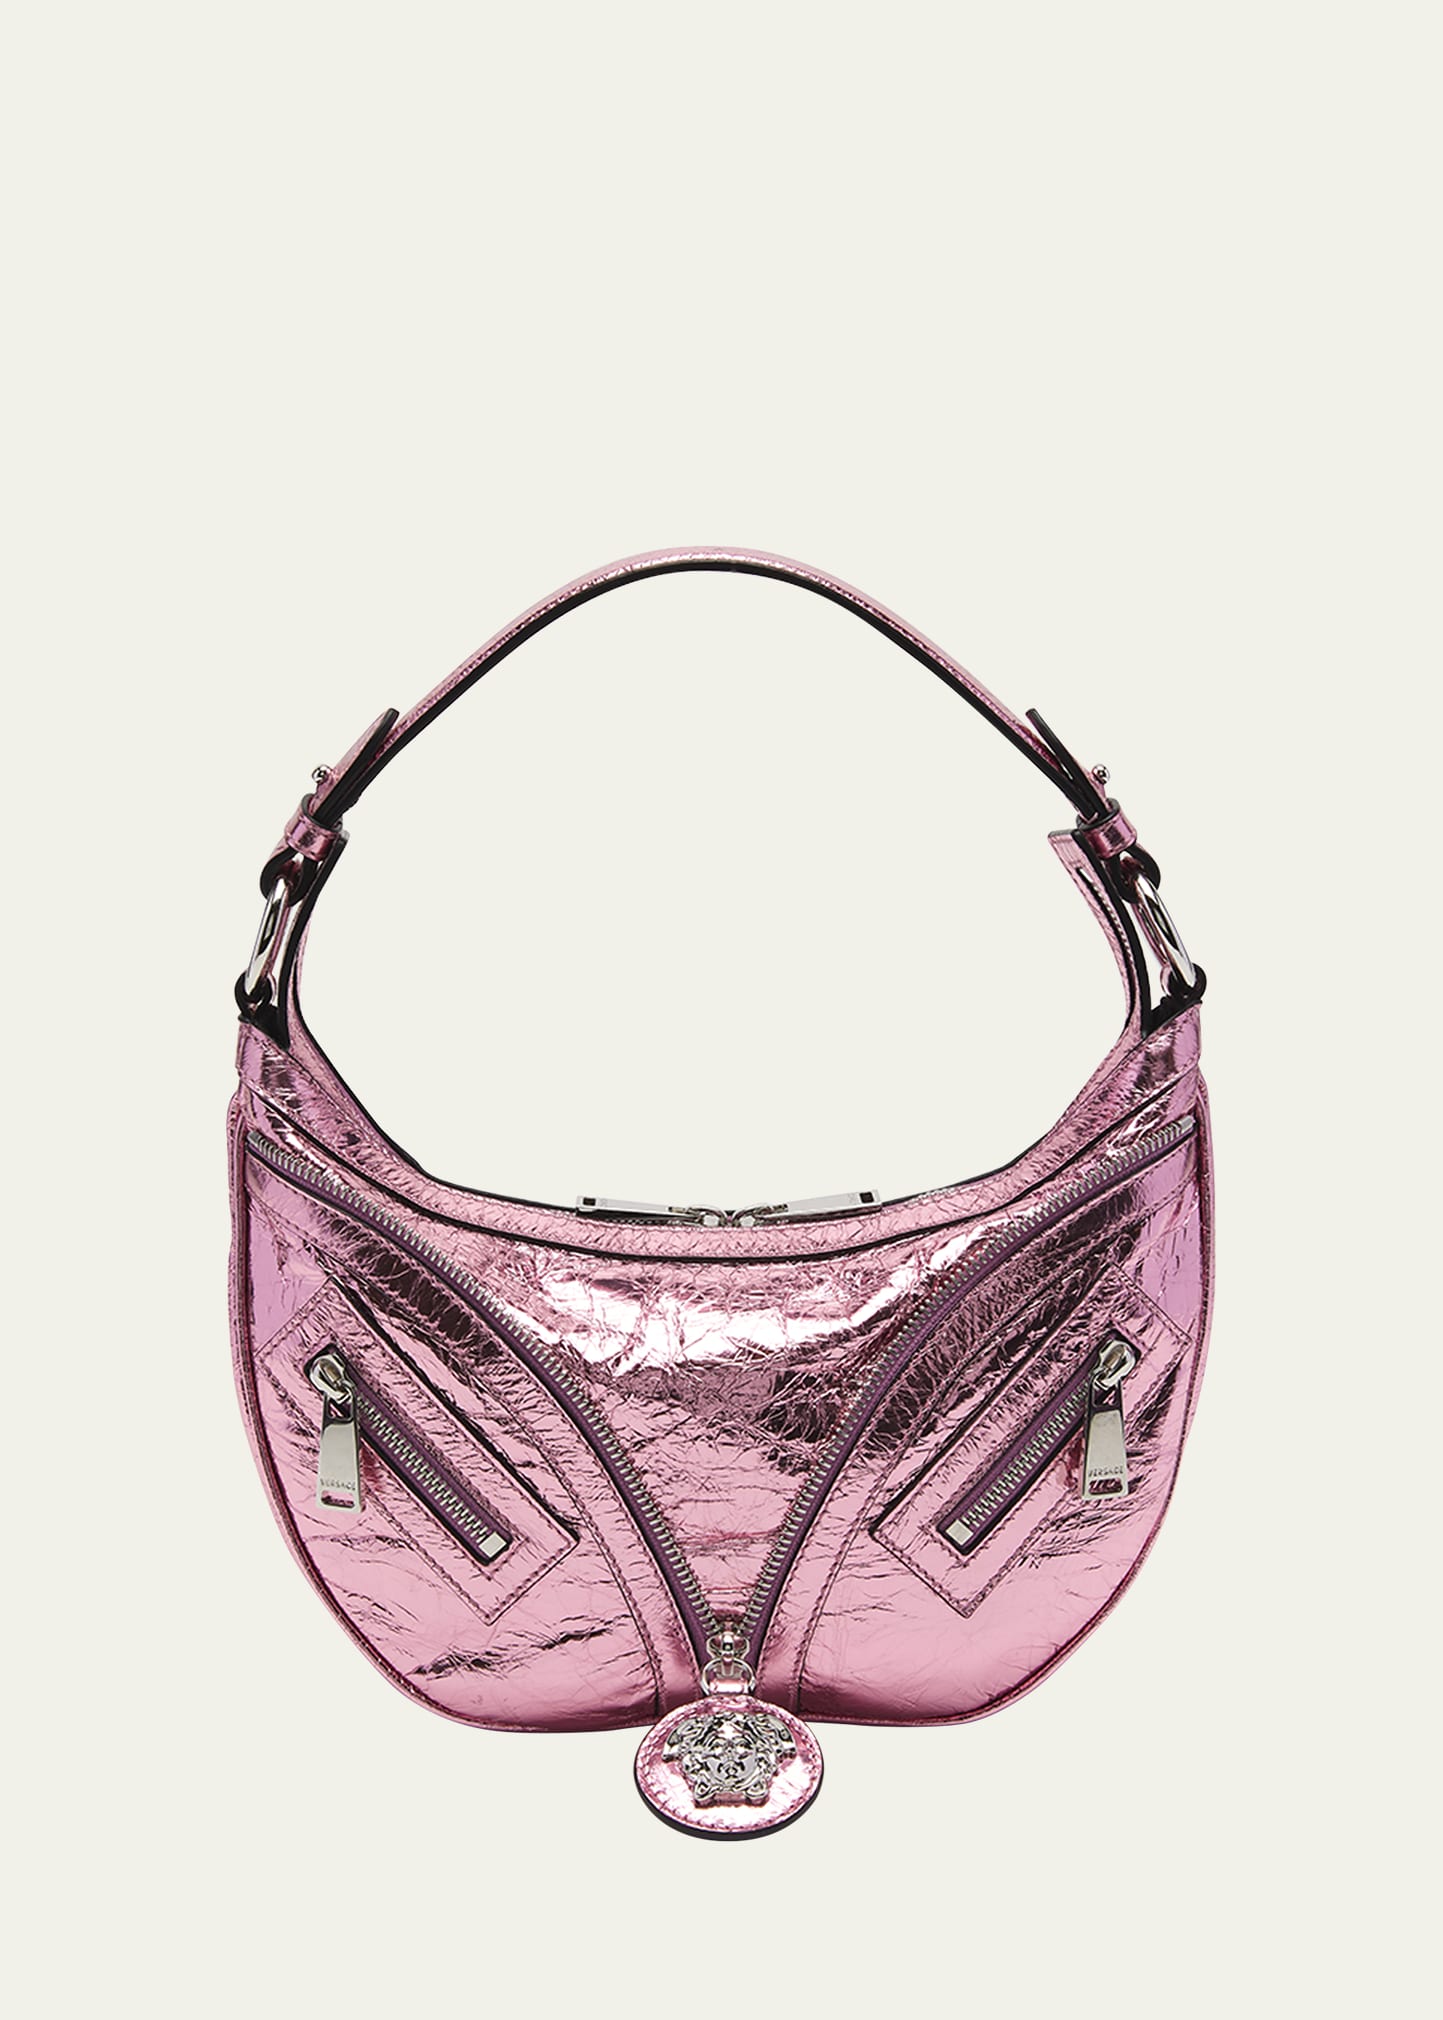 Versace Metallic Repeat Small Hobo Bag for Women